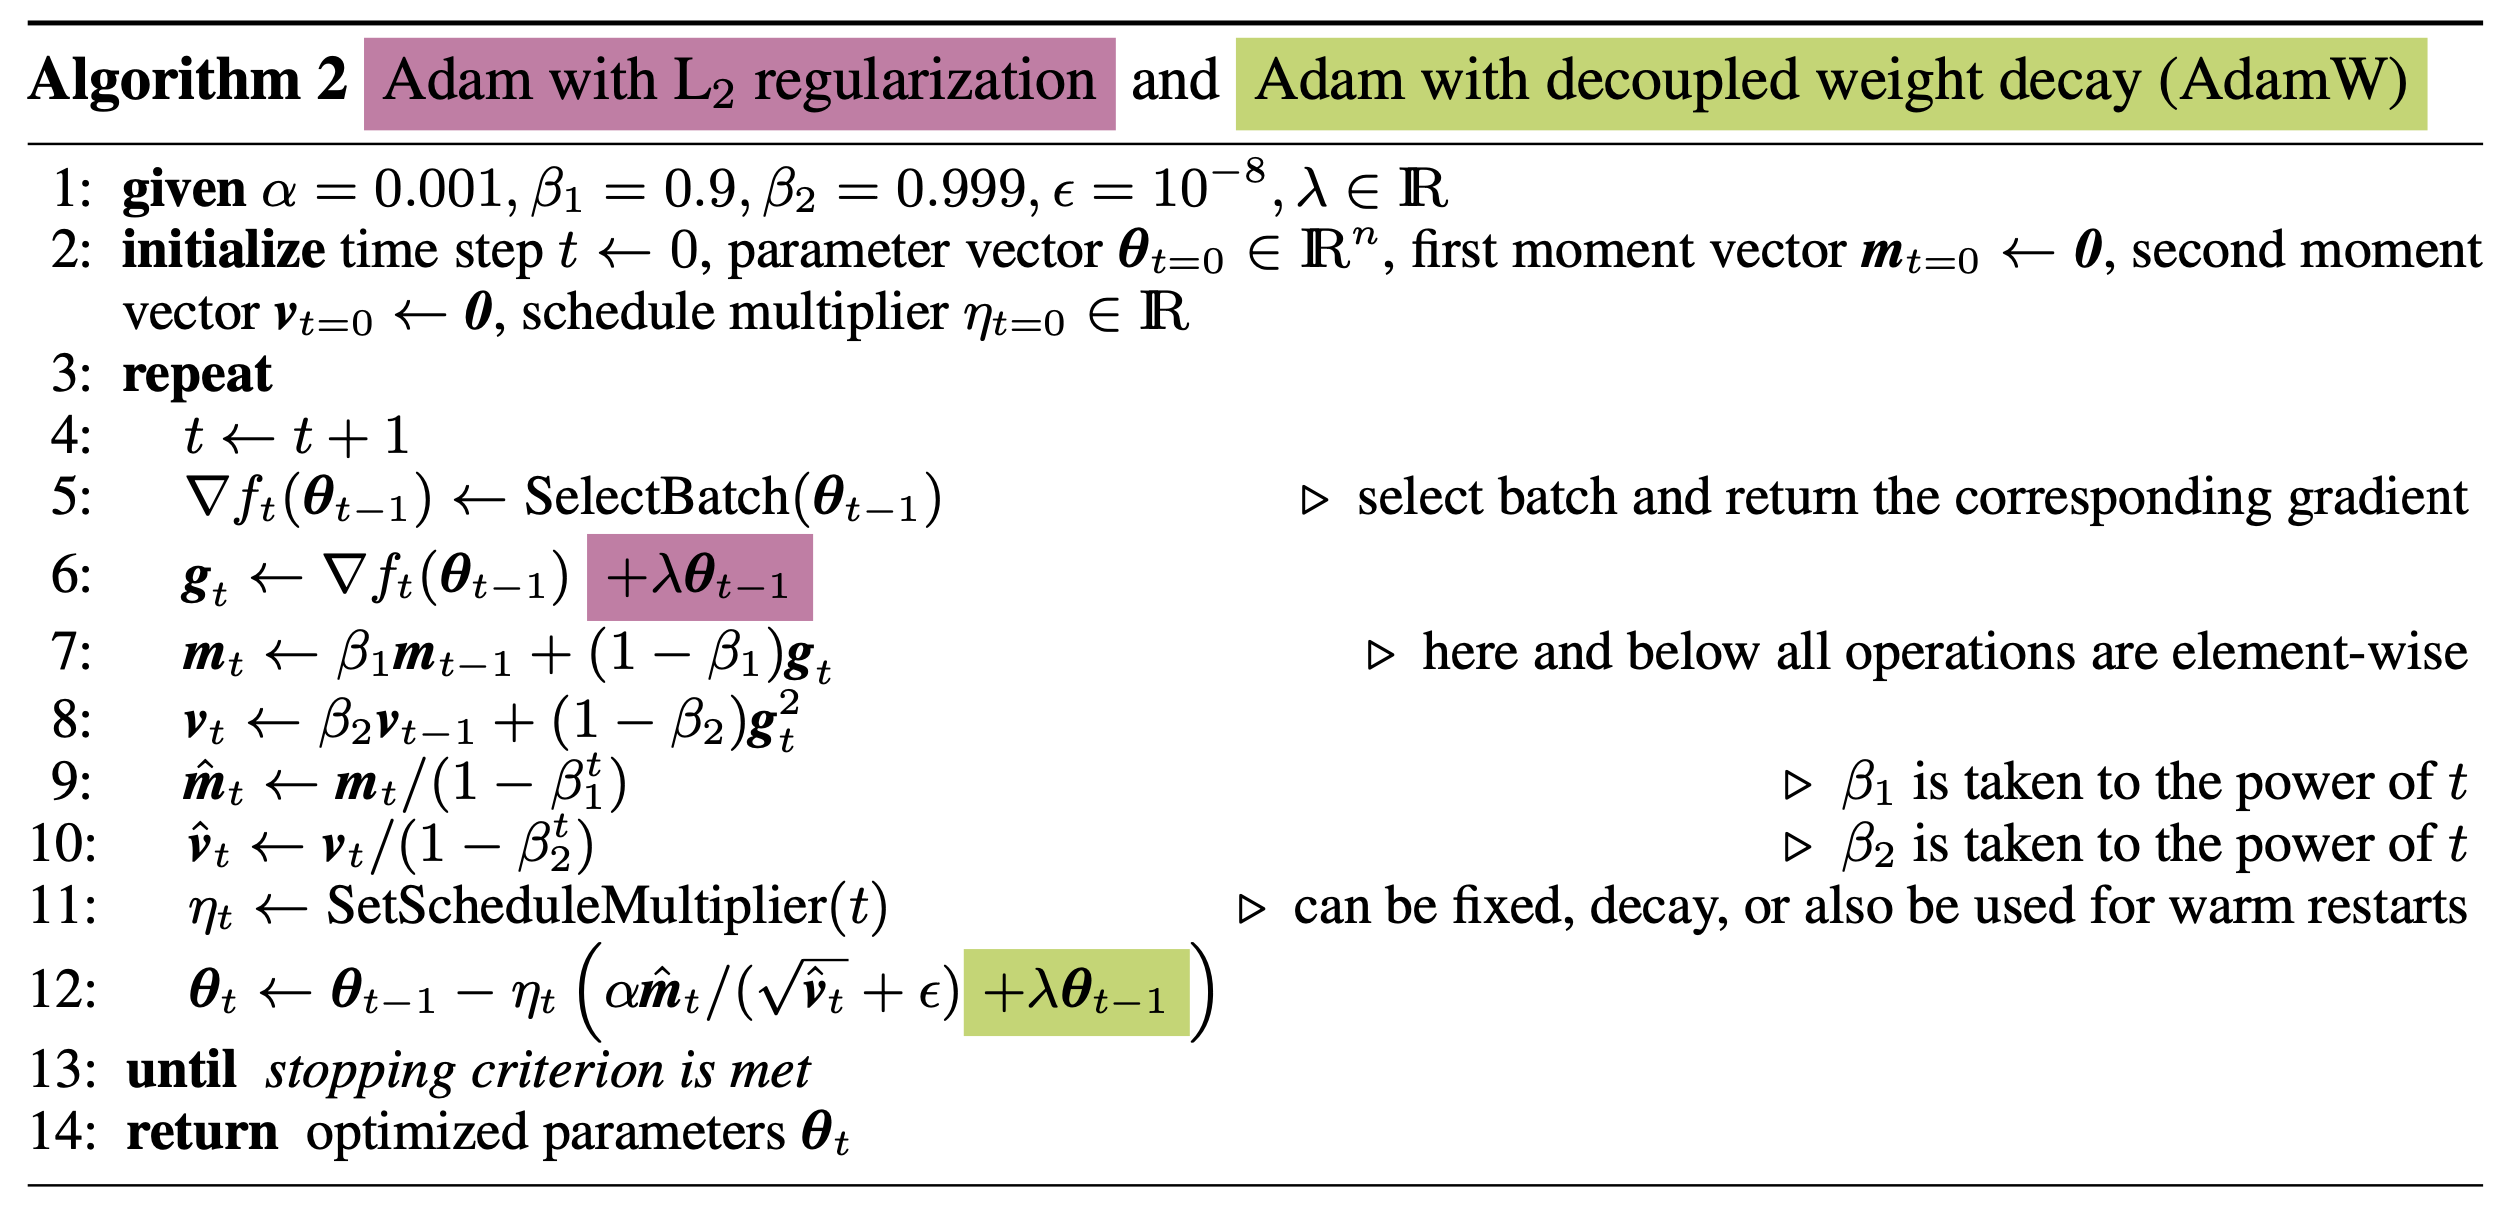 adamw_paper_algorithm_fig2